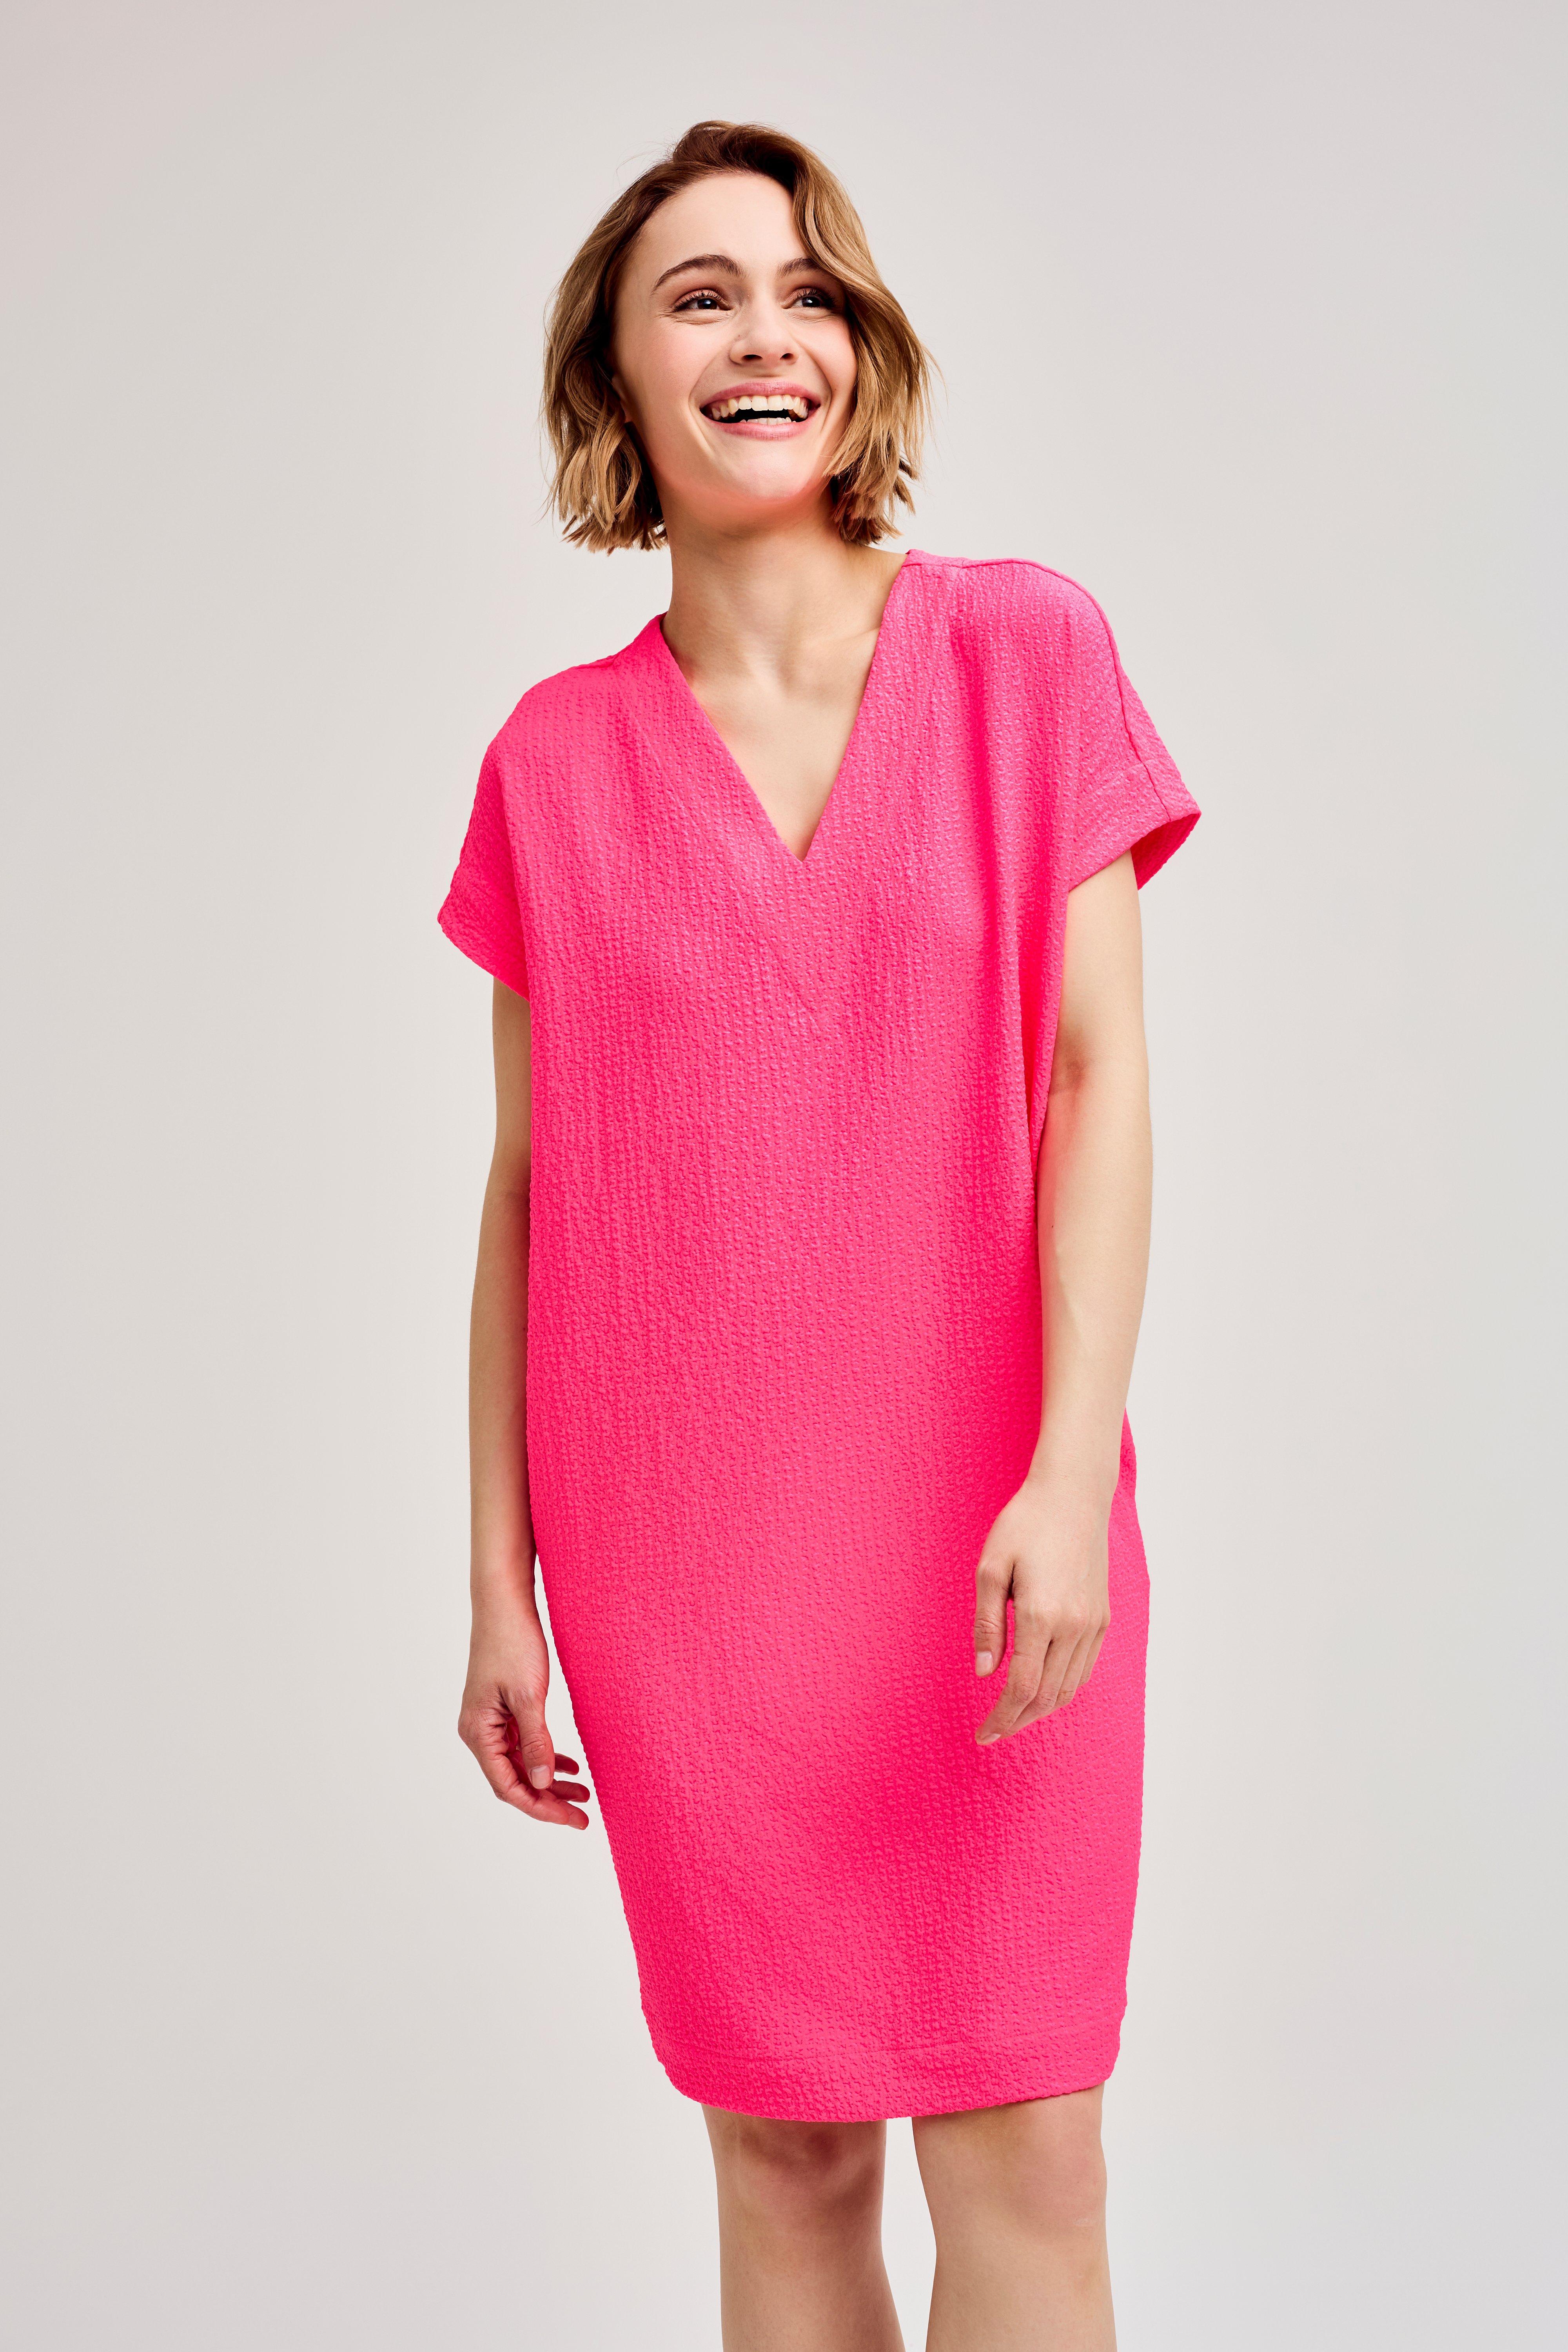 CKS Dames - SABADRESS - short dress - bright pink